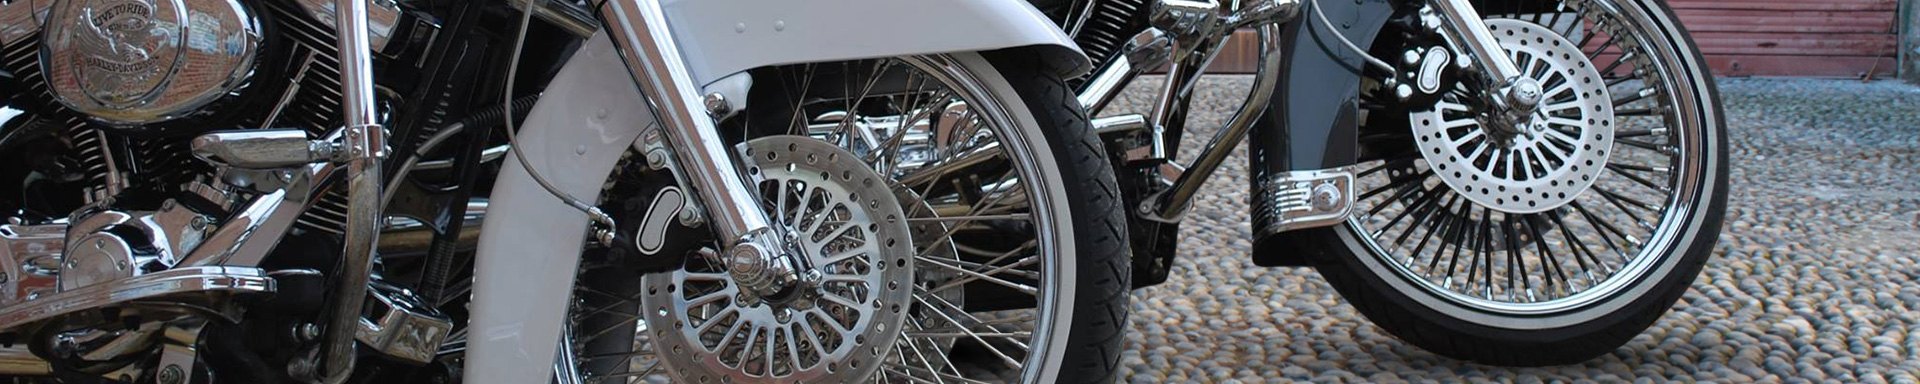 Ride Wright Wheels Brake Parts